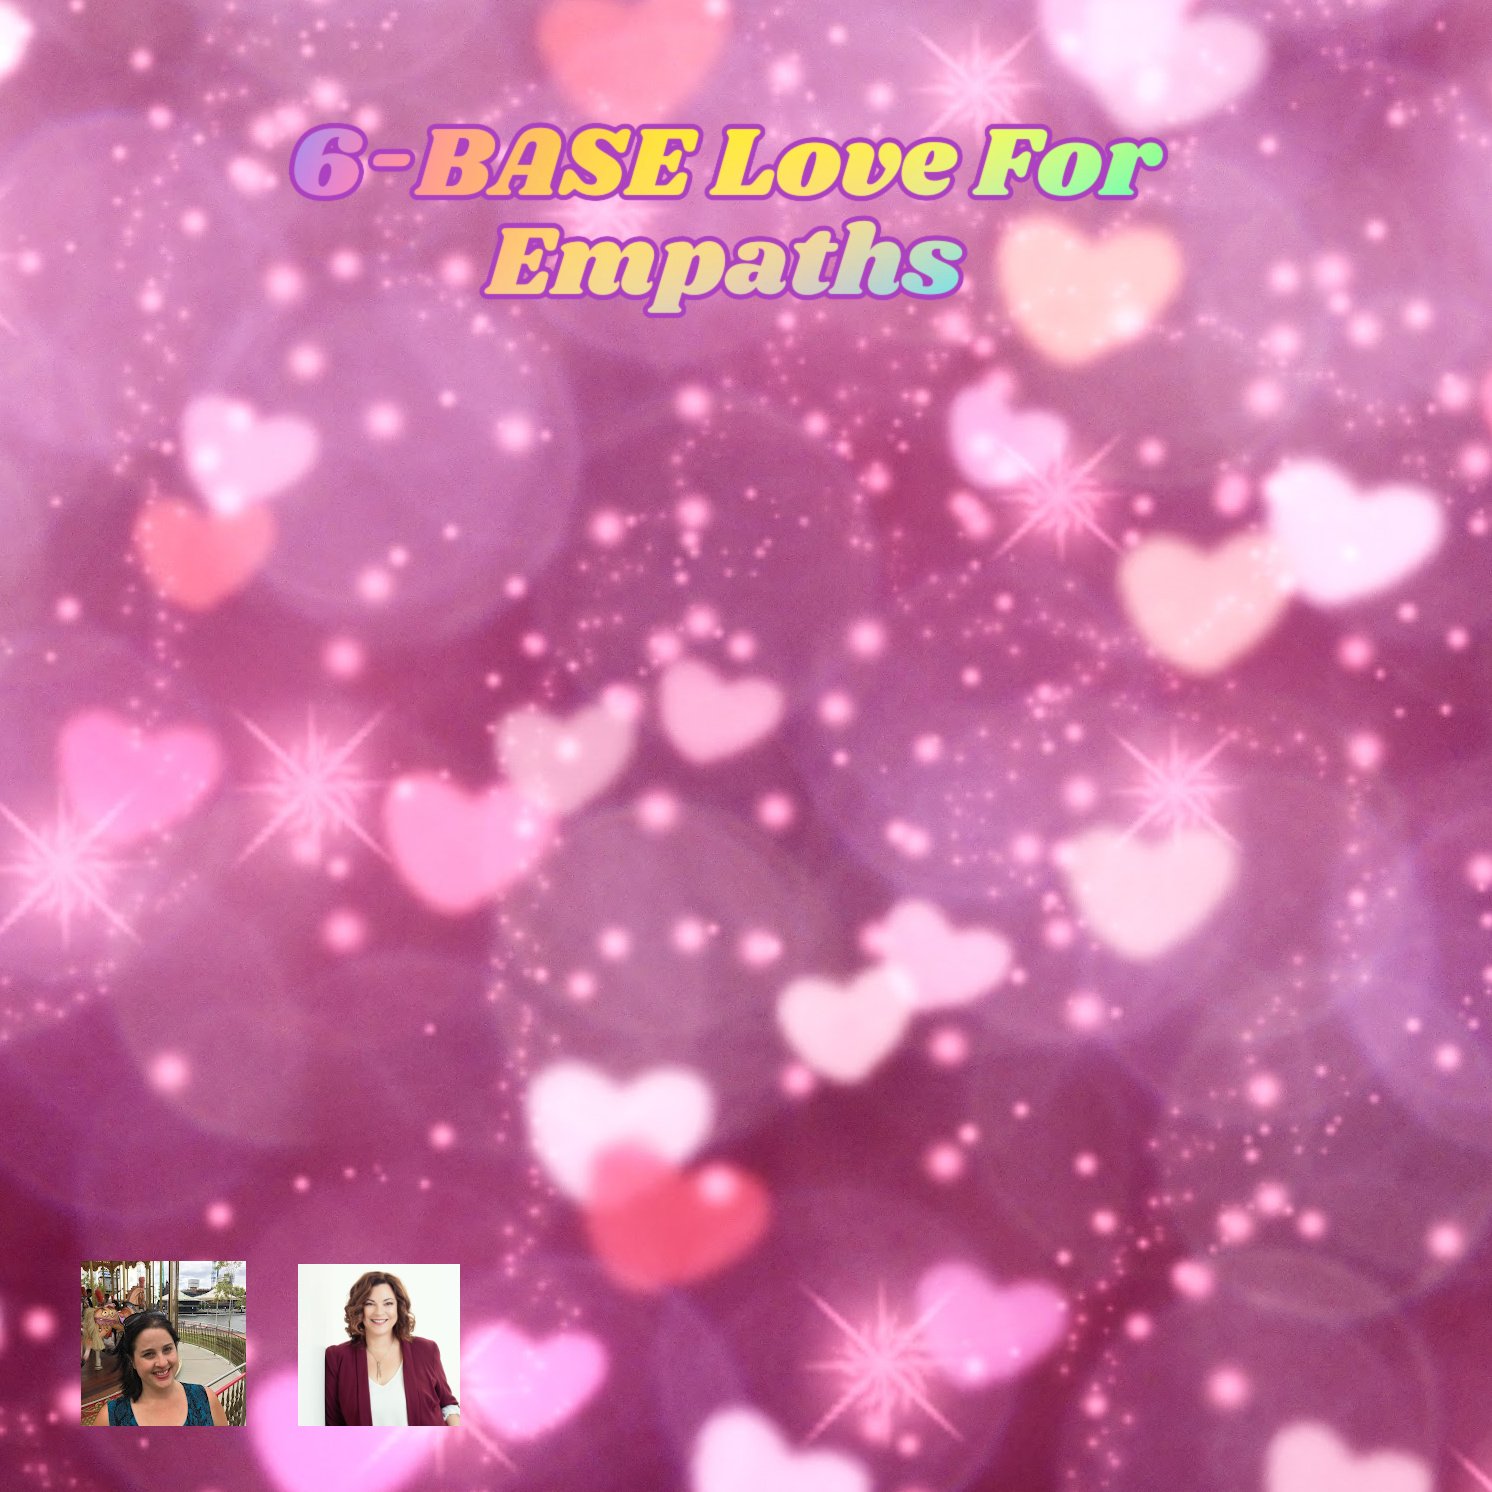 6-BASE Love for Empaths